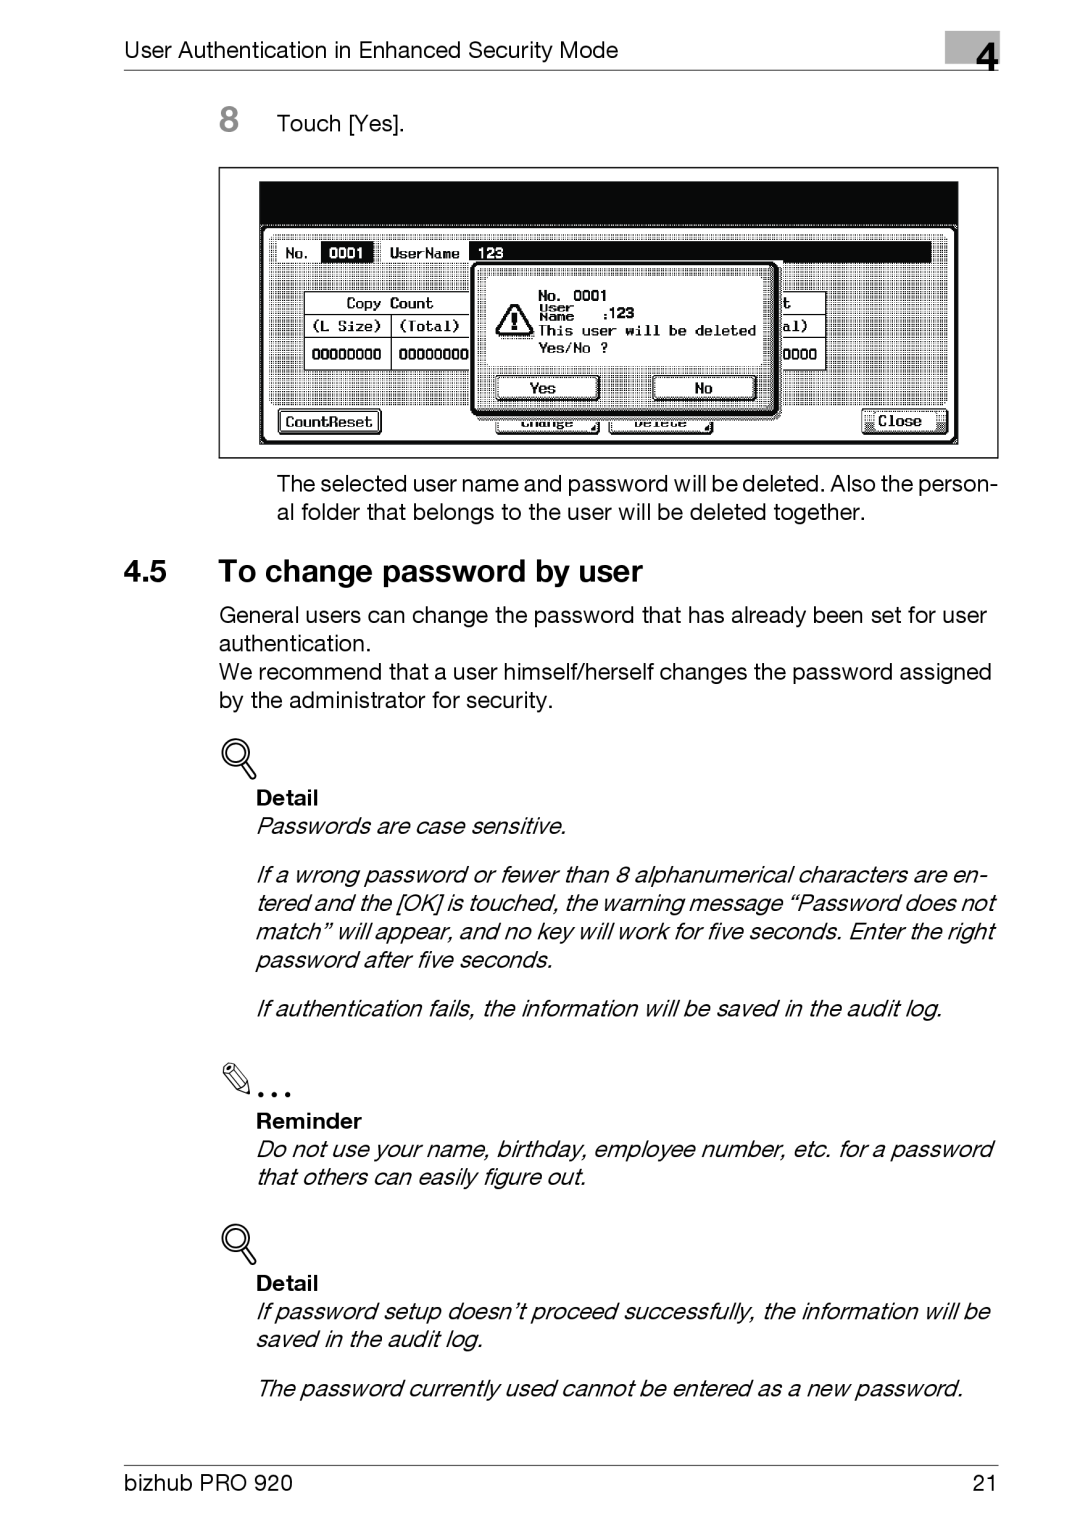 Konica Minolta 920 manual To change password by user, Detail, Reminder 